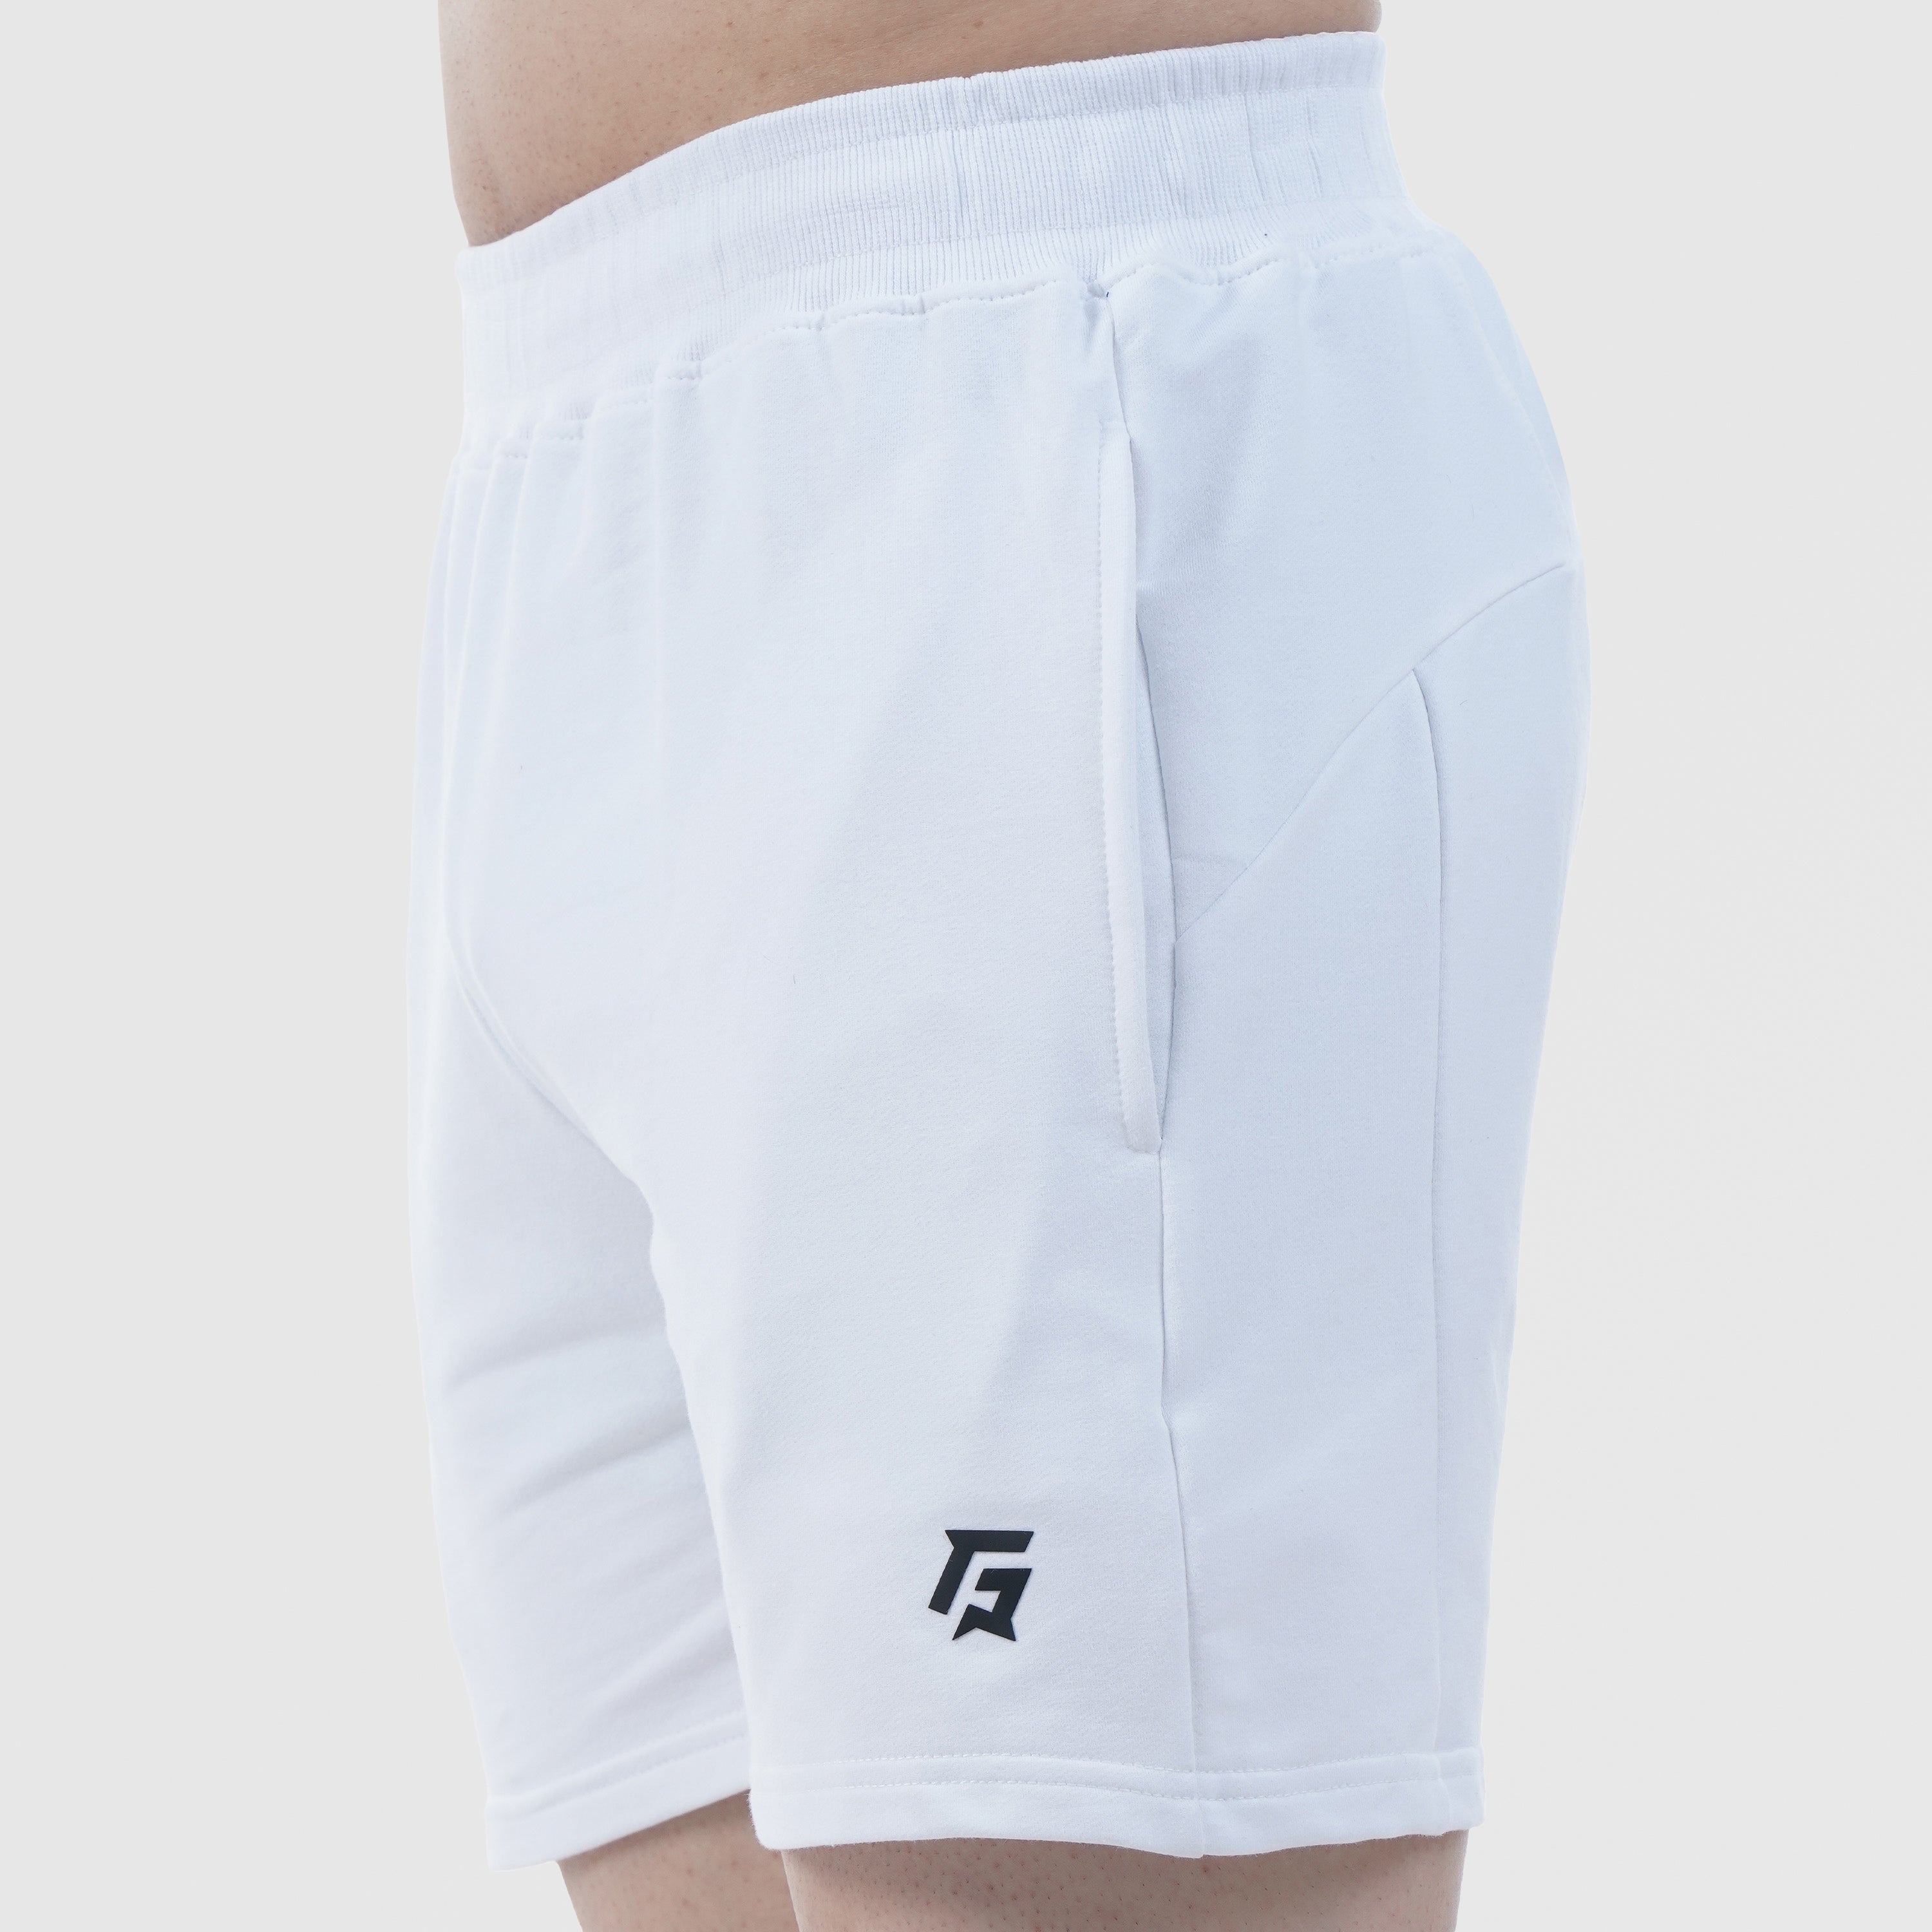 SpeedFlex Shorts (White)